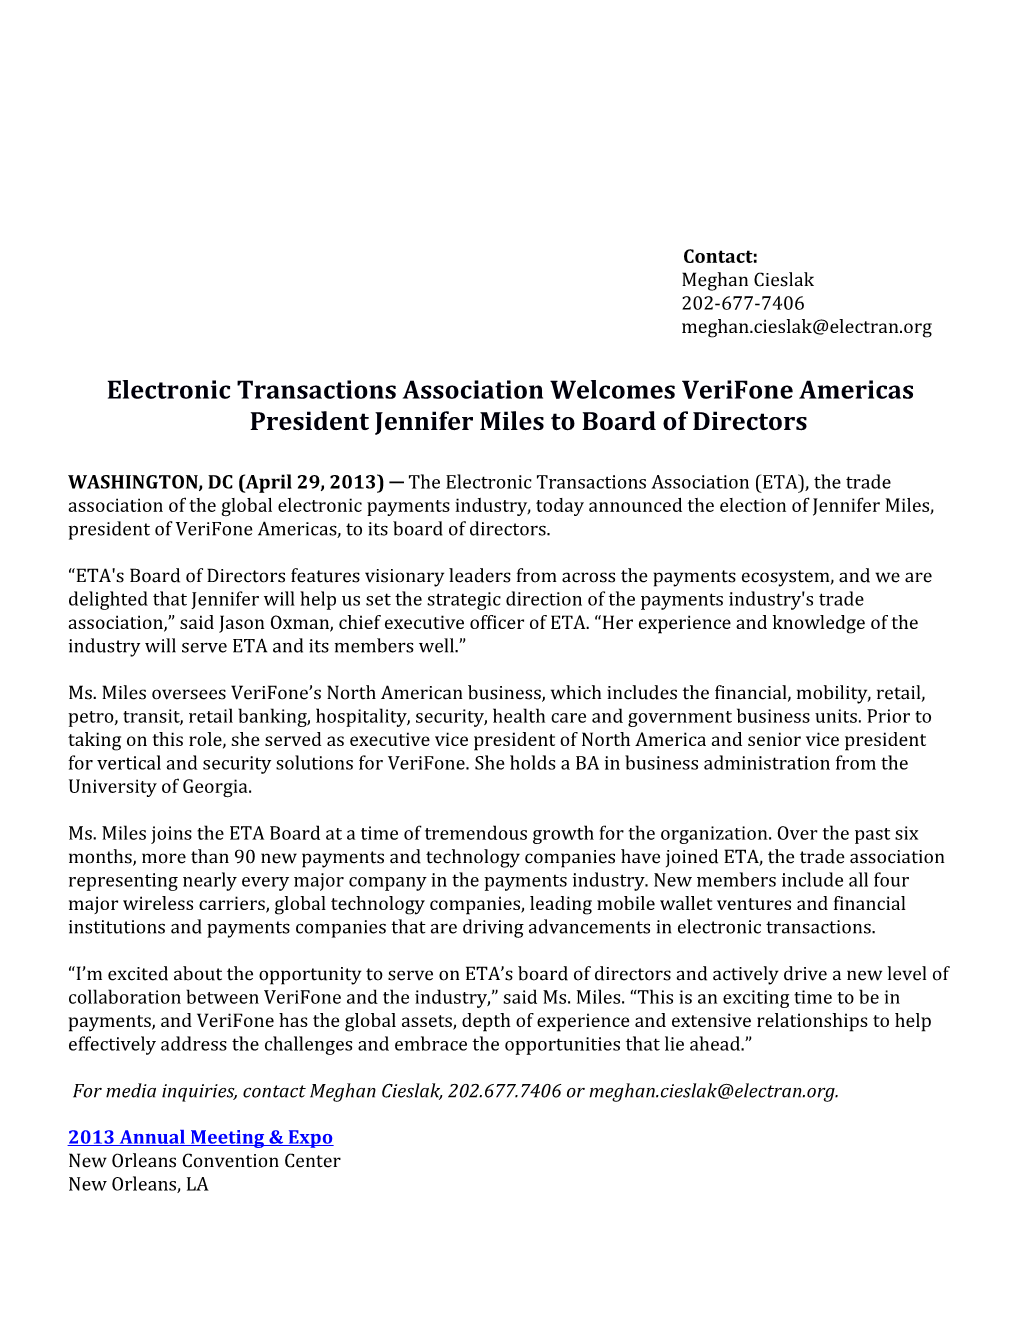 Electronic Transactions Association Welcomes Verifone Americas President Jennifer Miles